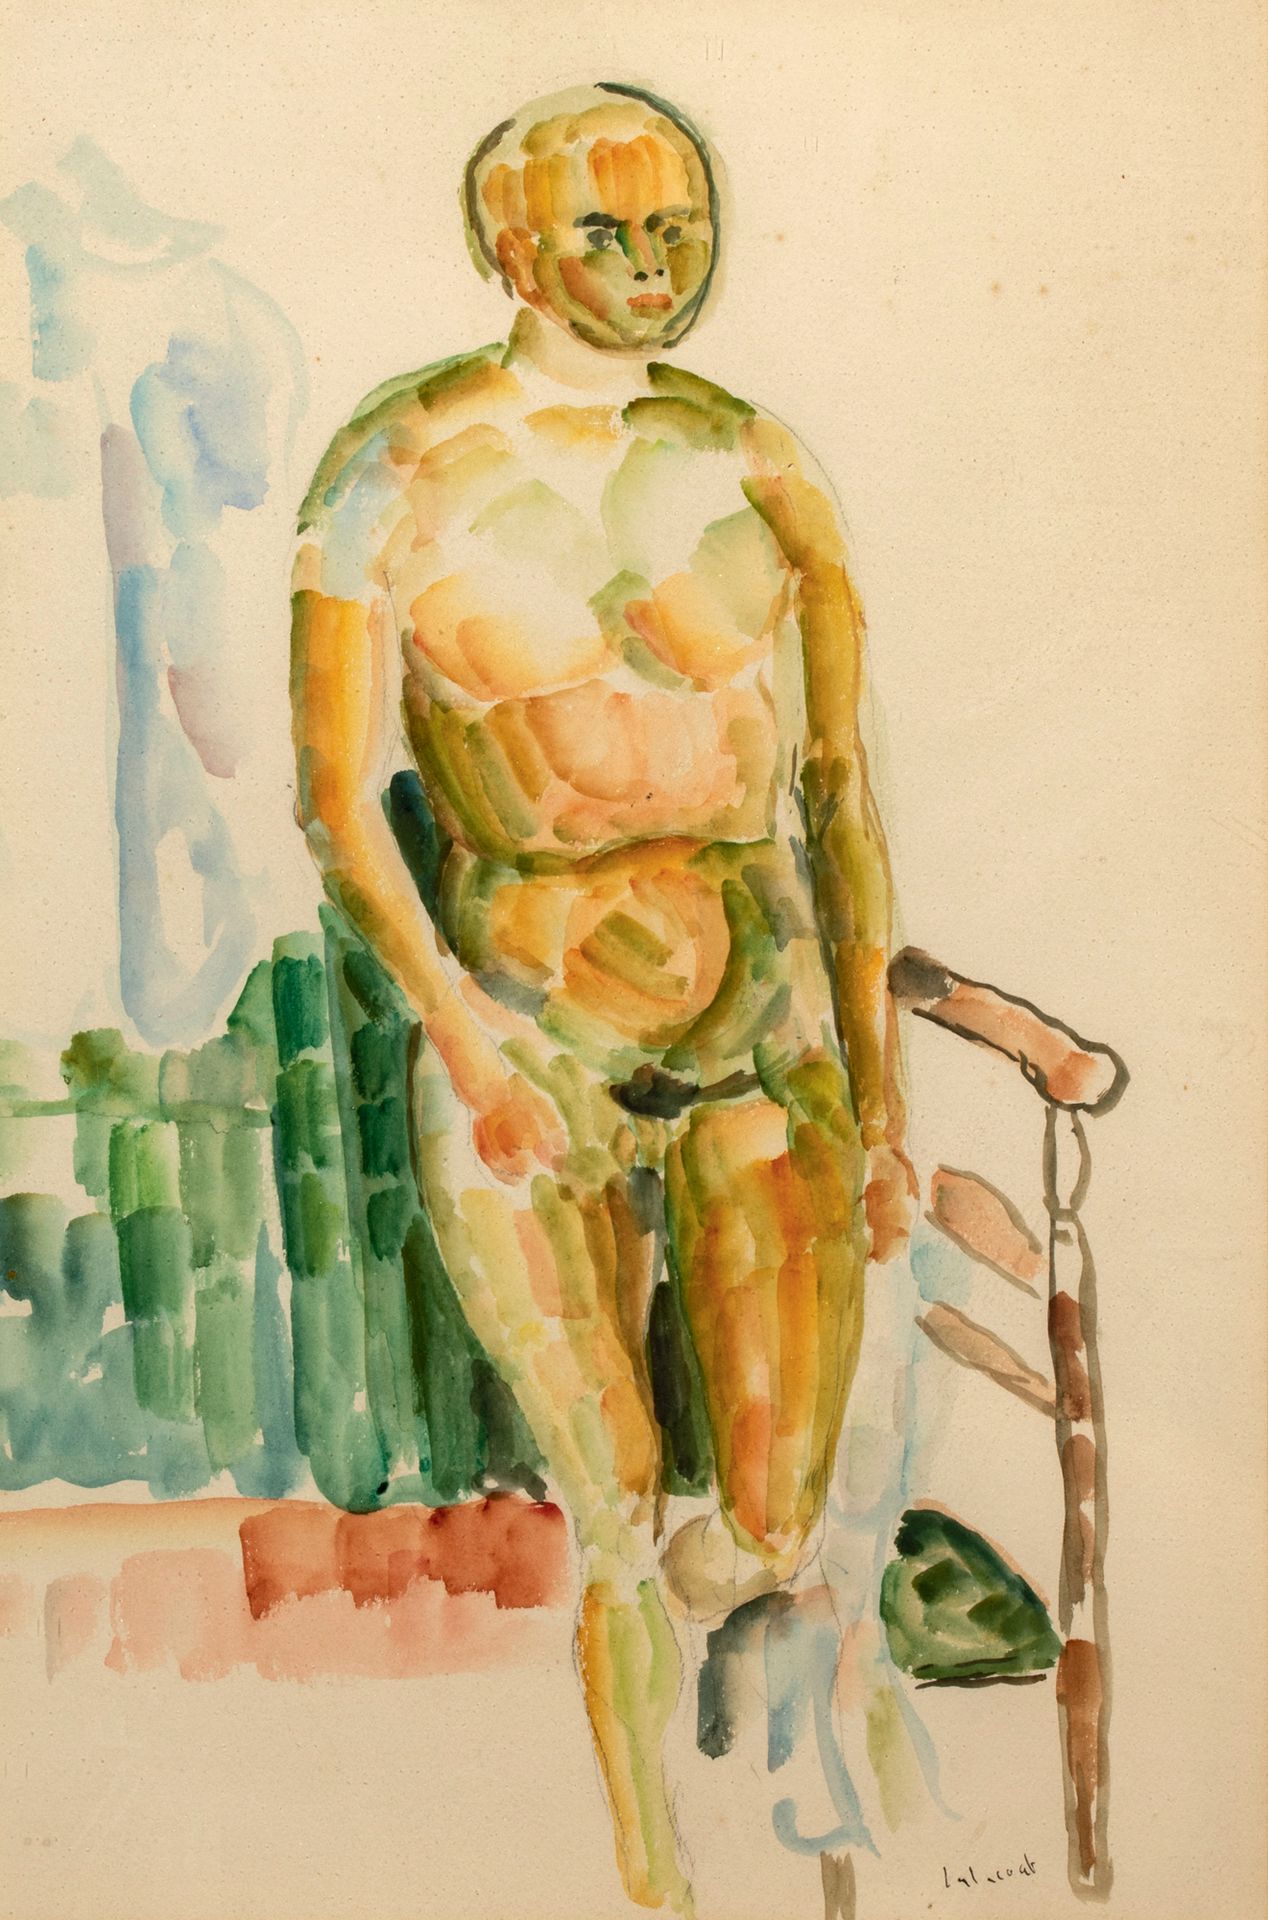 Pierre TAL COAT (1905-1985) ( ref 139) 
椅子上的裸体，1927年



纸上水彩画，右下角有签名，背面有展览标签 42 &hellip;